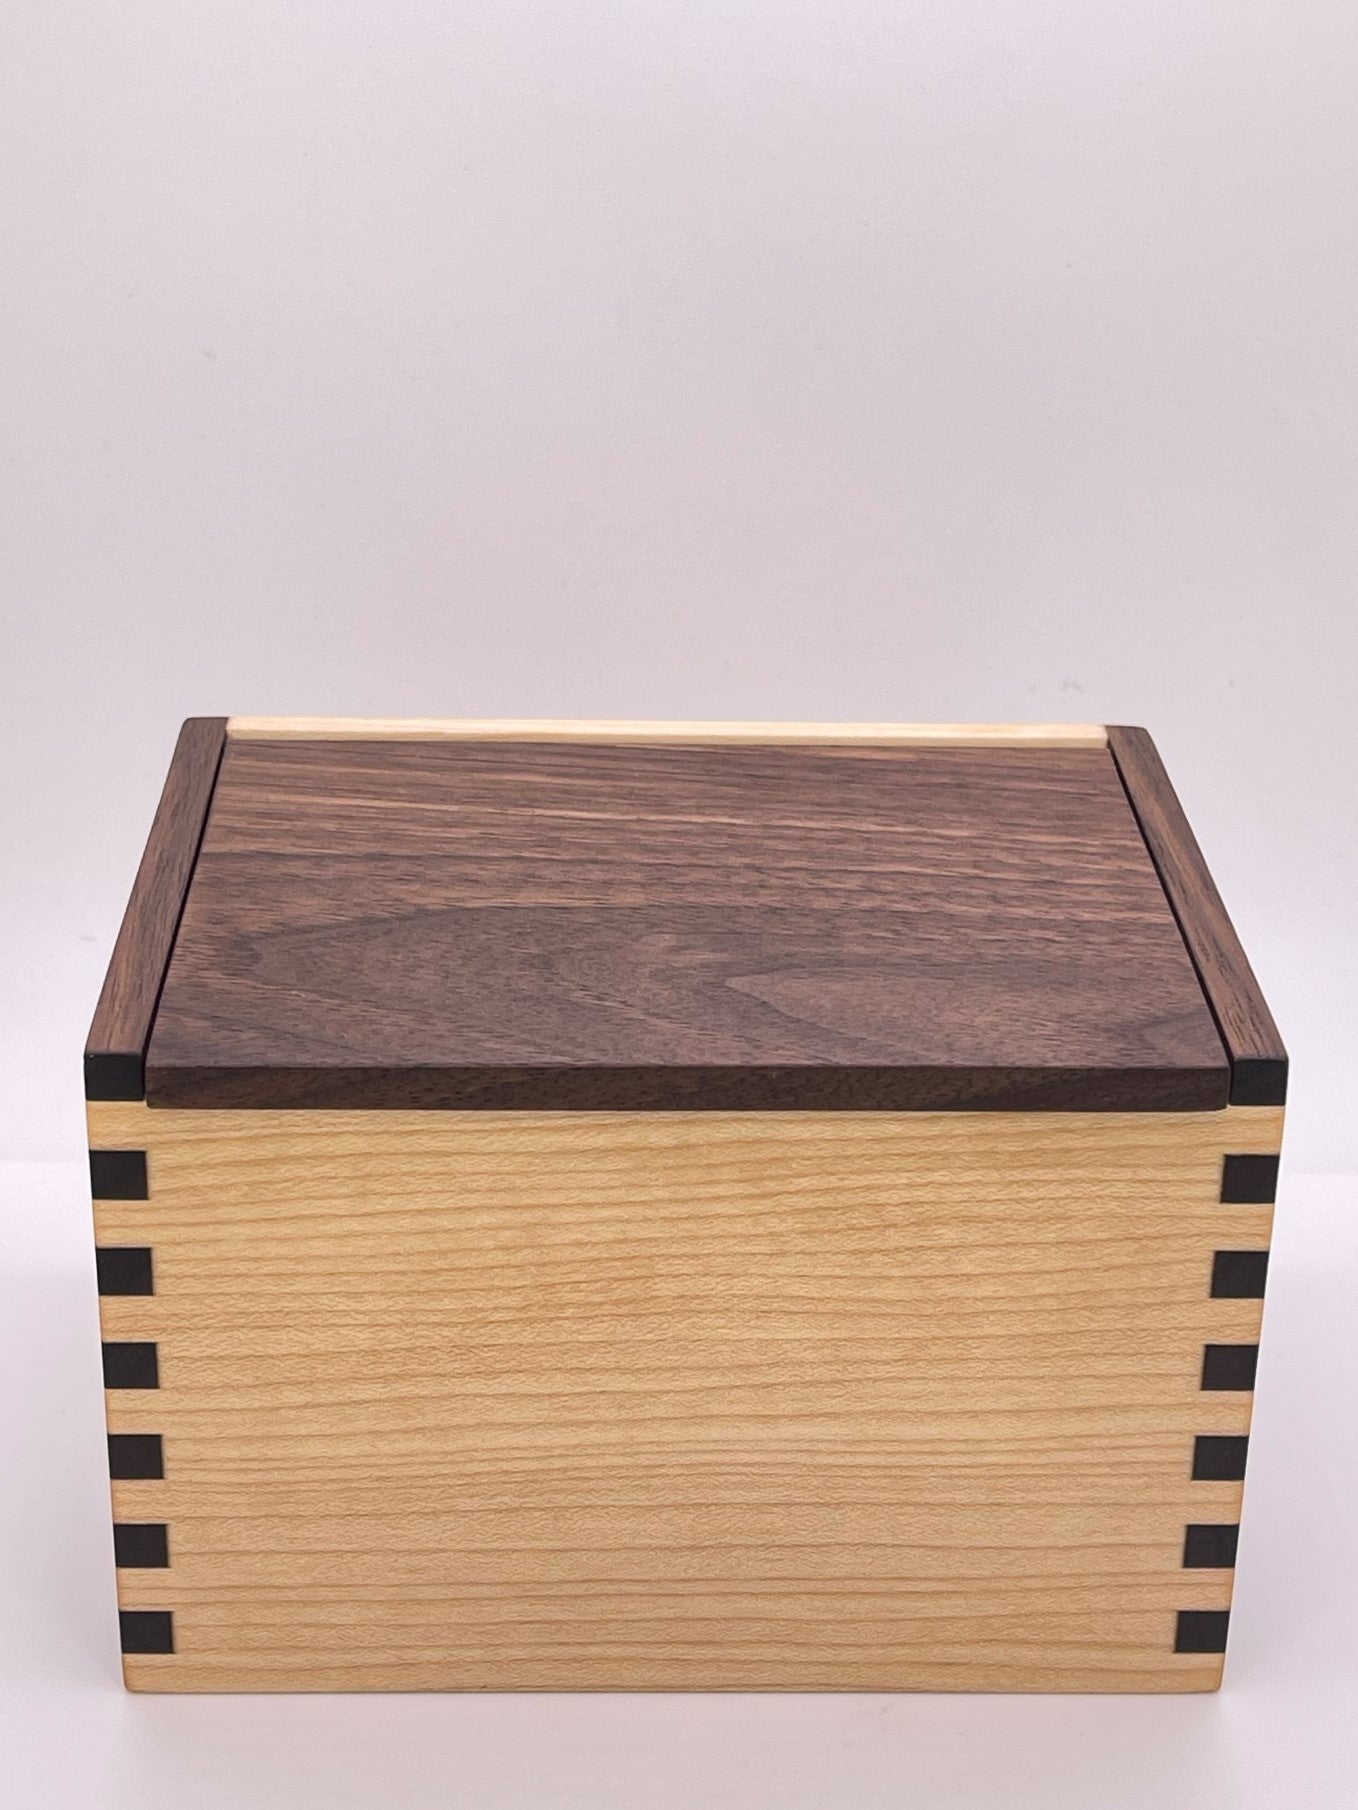 Wood Salt Cellar - Salt Box - Salt Pig -  Keepsake Box - Walnut and Maple Hardwood